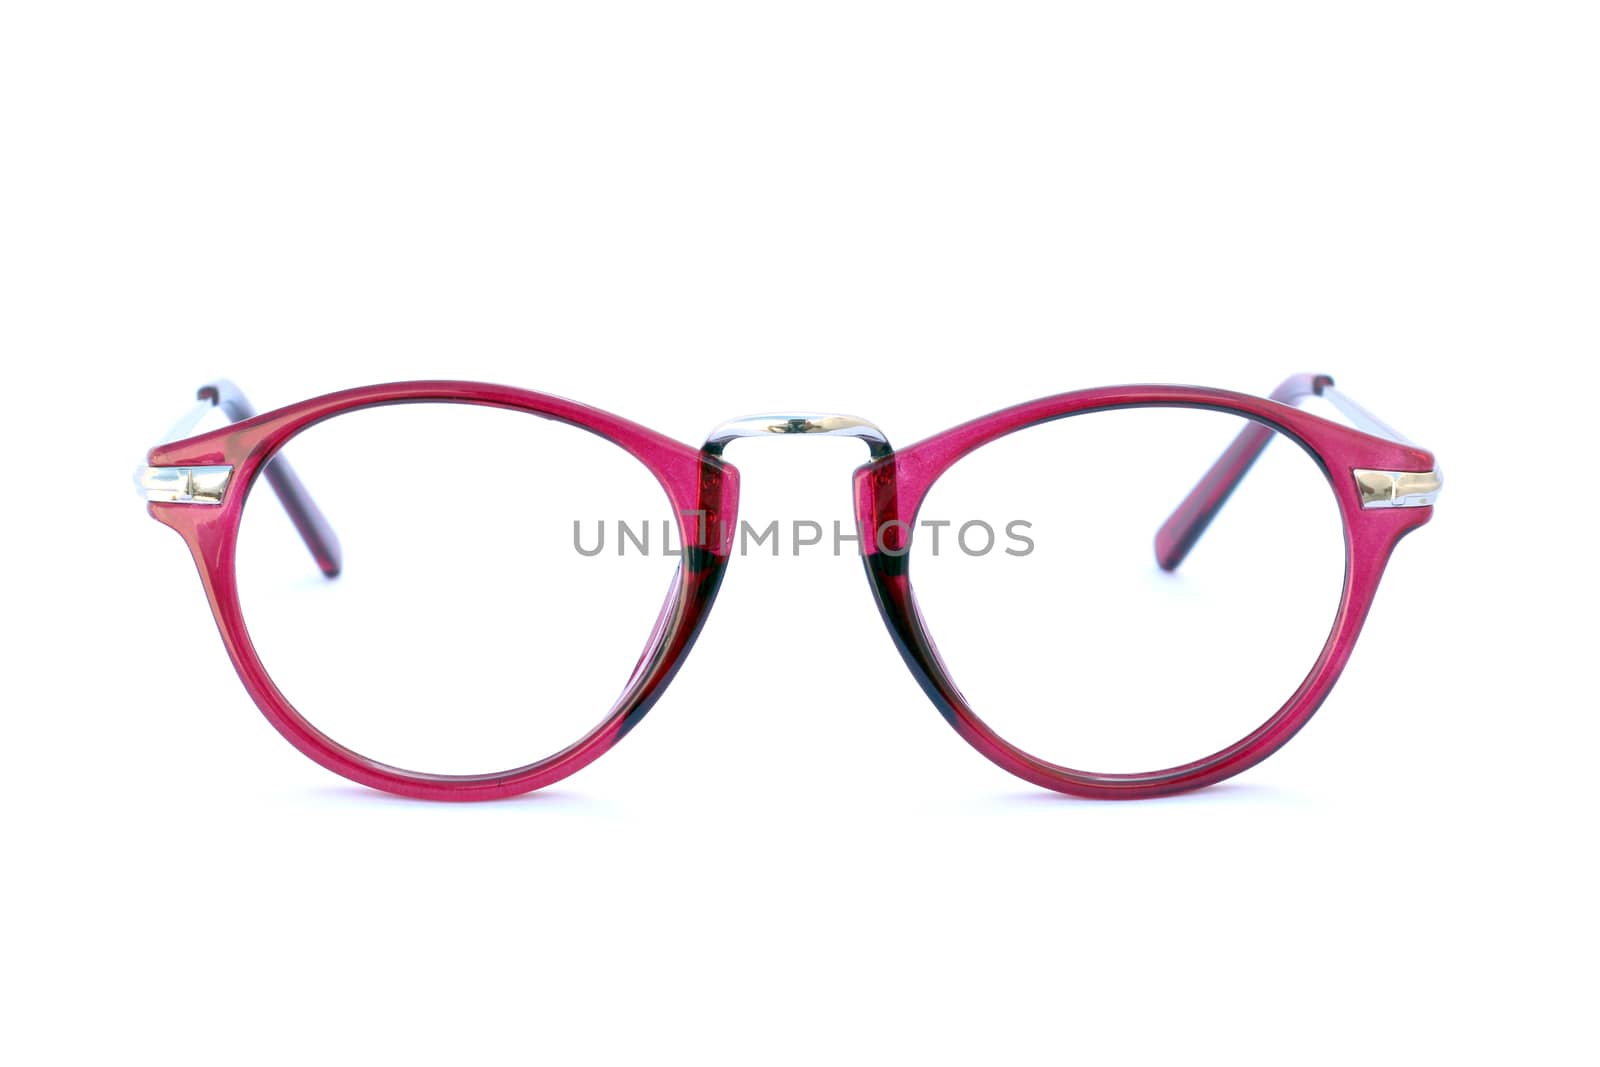 Image of eyeglasses on a white background by yod67